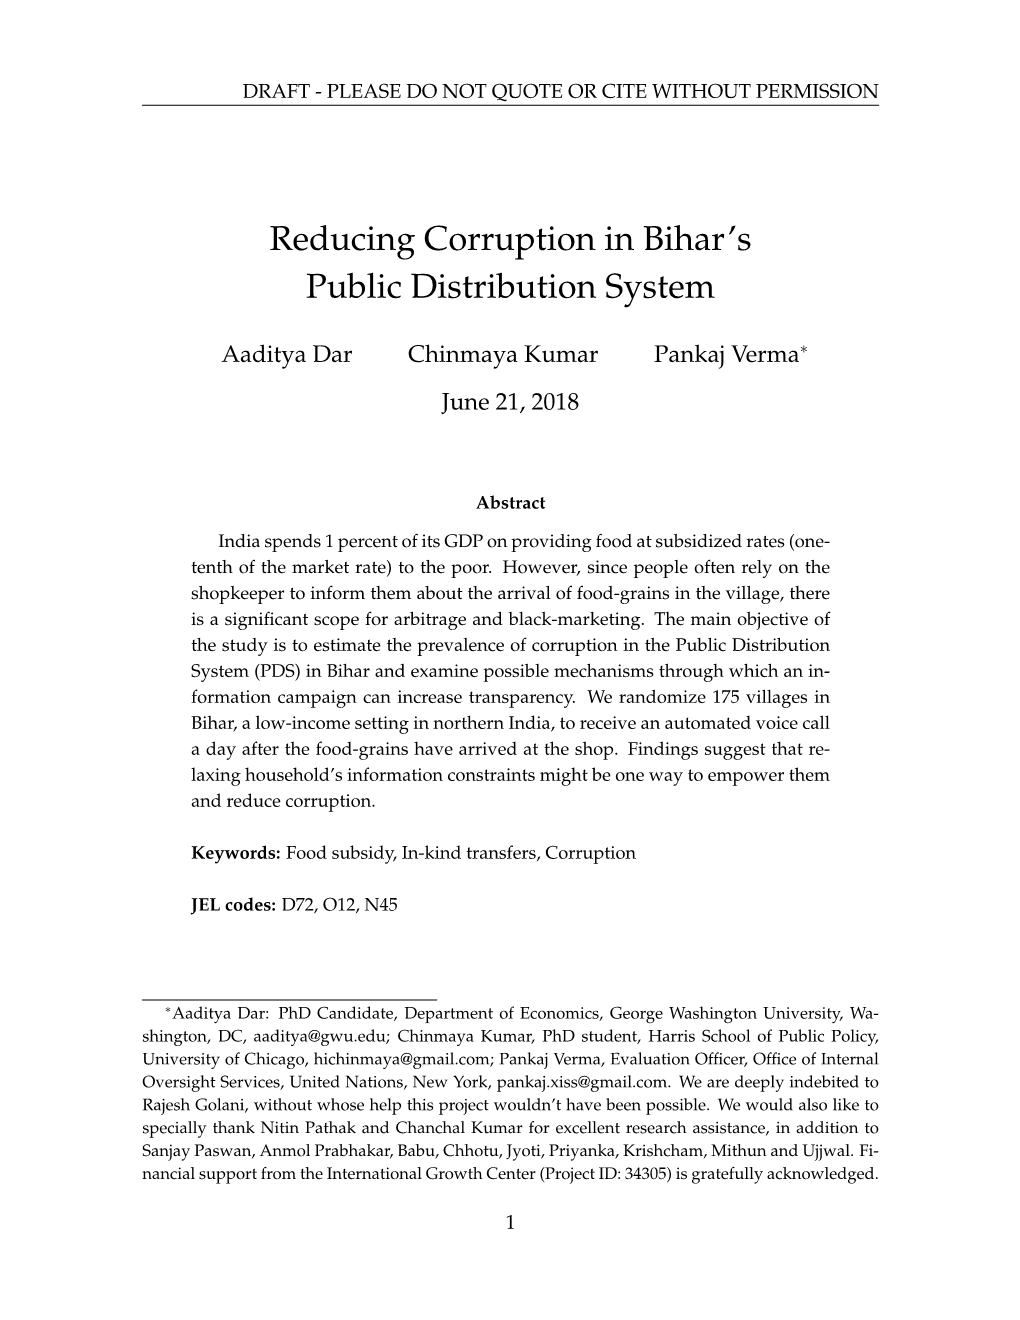 Reducing Corruption in Bihar's Public Distribution System